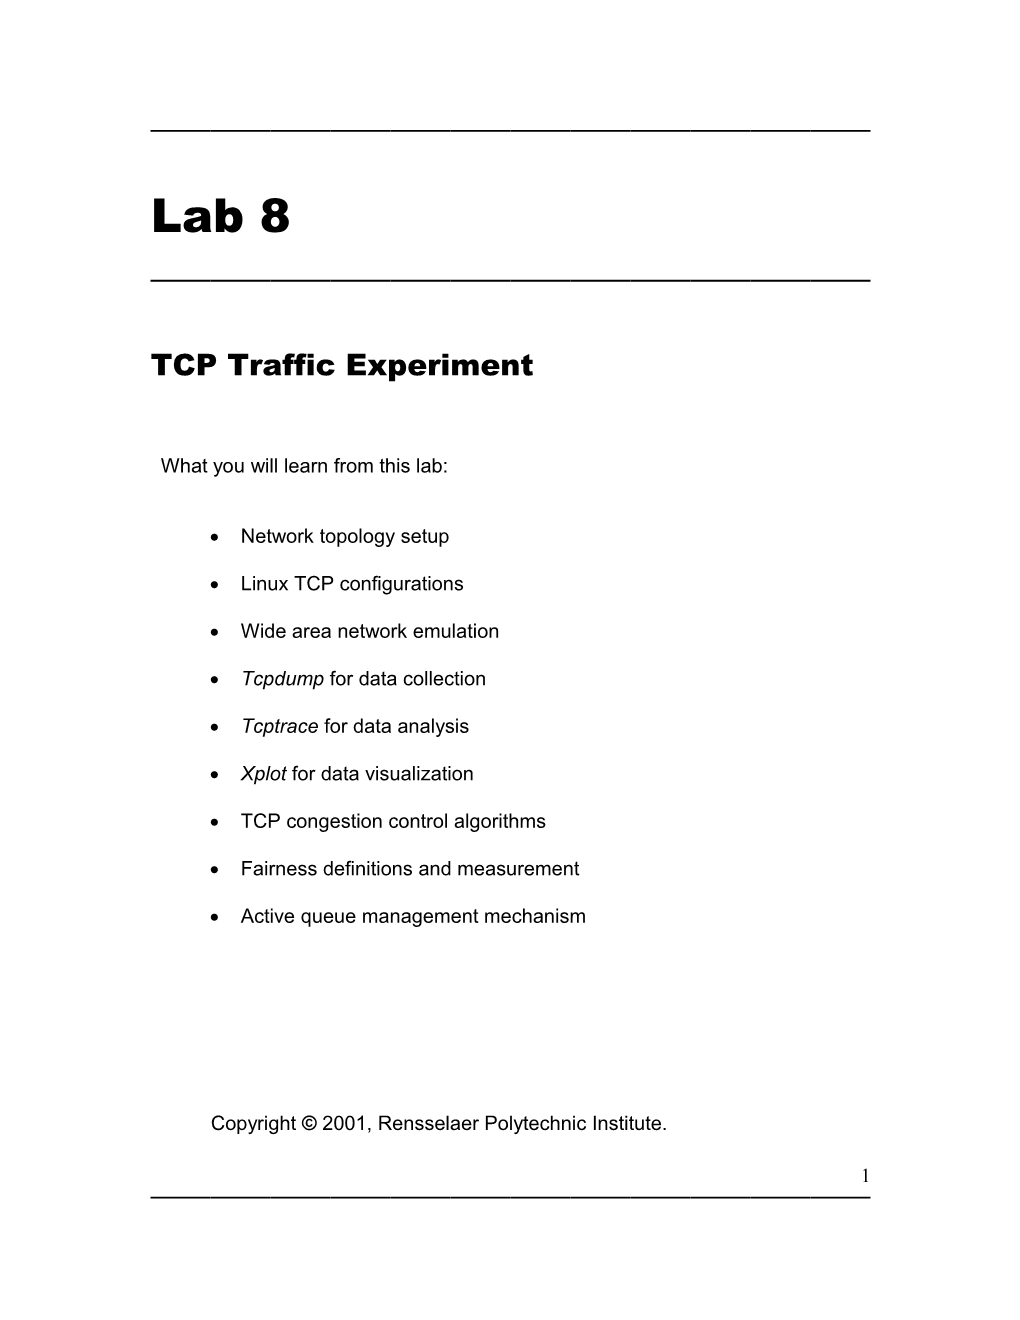 TCP Traffic Experiment